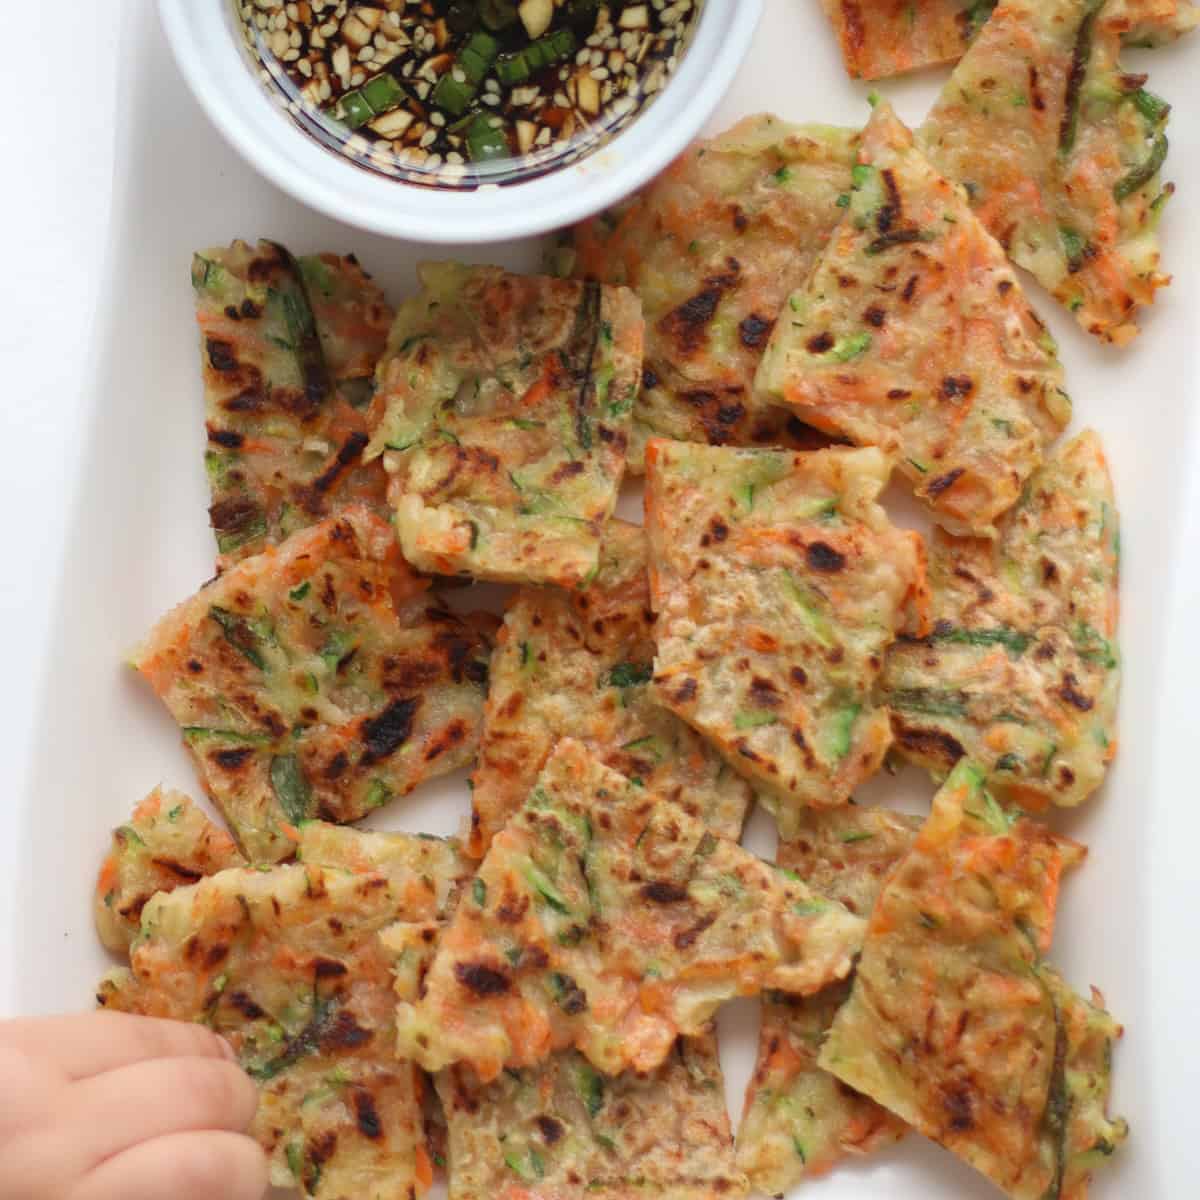 https://www.mjandhungryman.com/wp-content/uploads/2019/04/Korean-vegetable-jeon.jpg